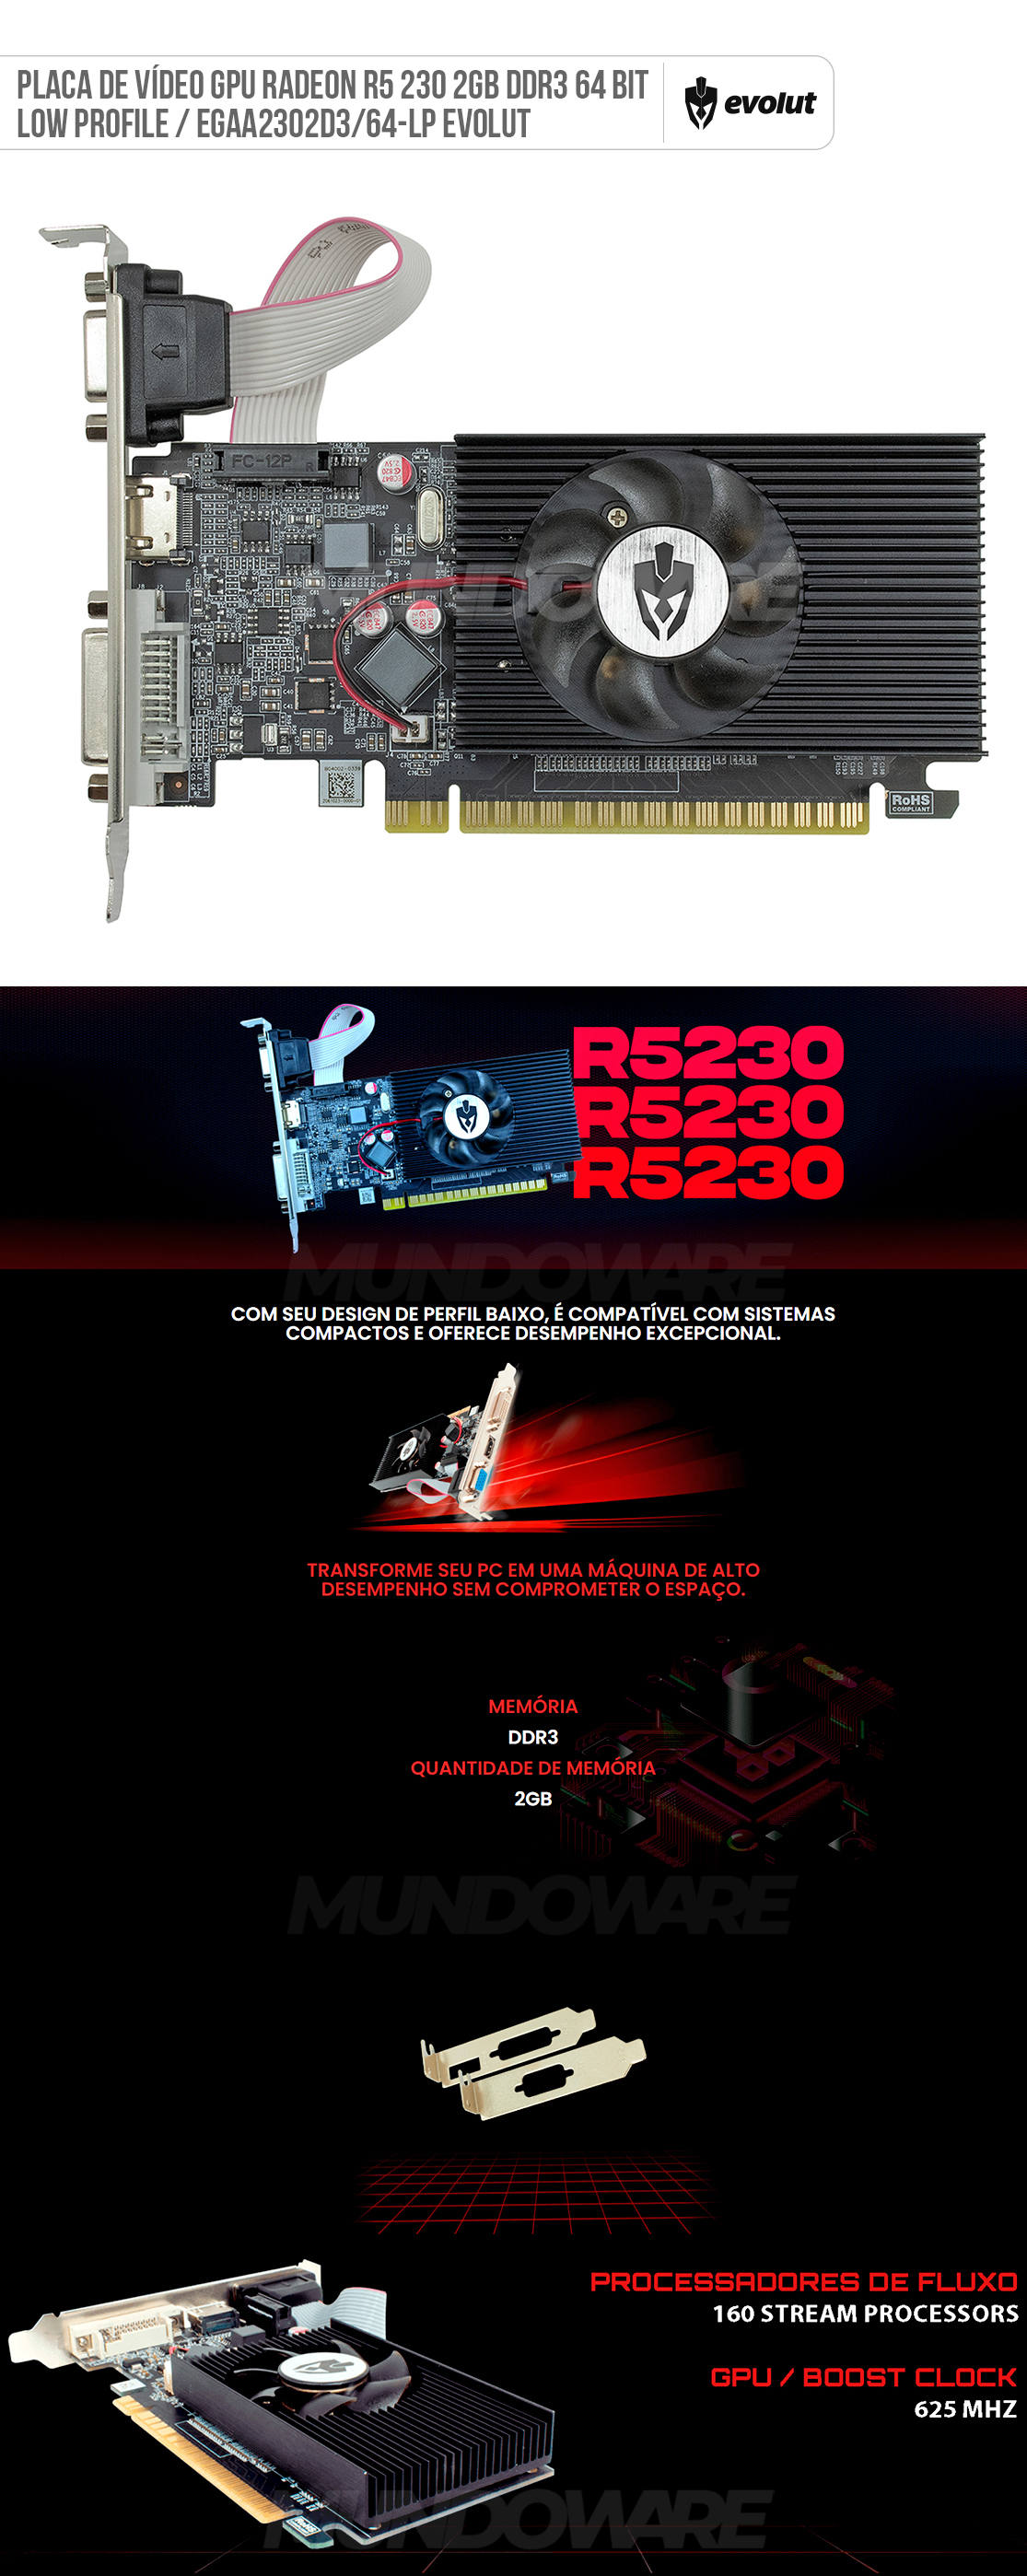 Placa de Vídeo GPU Radeon R5 230 2GB DDR3 64 Bit Low Profile EGAA2302D3 Evolut